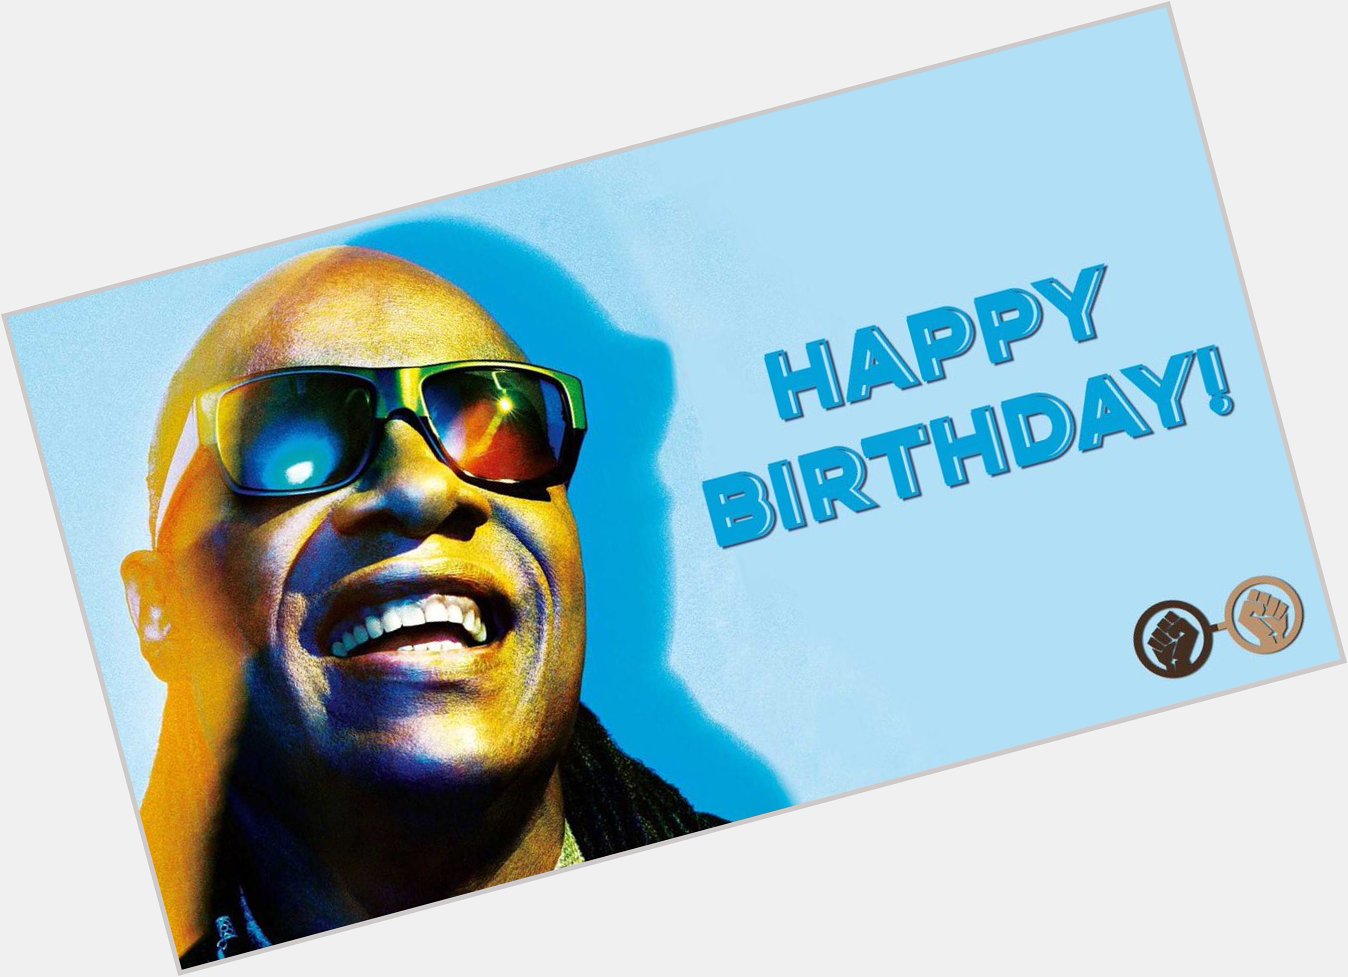 Happy birthday, Stevie Wonder! The legendary musician turns 68 today! 